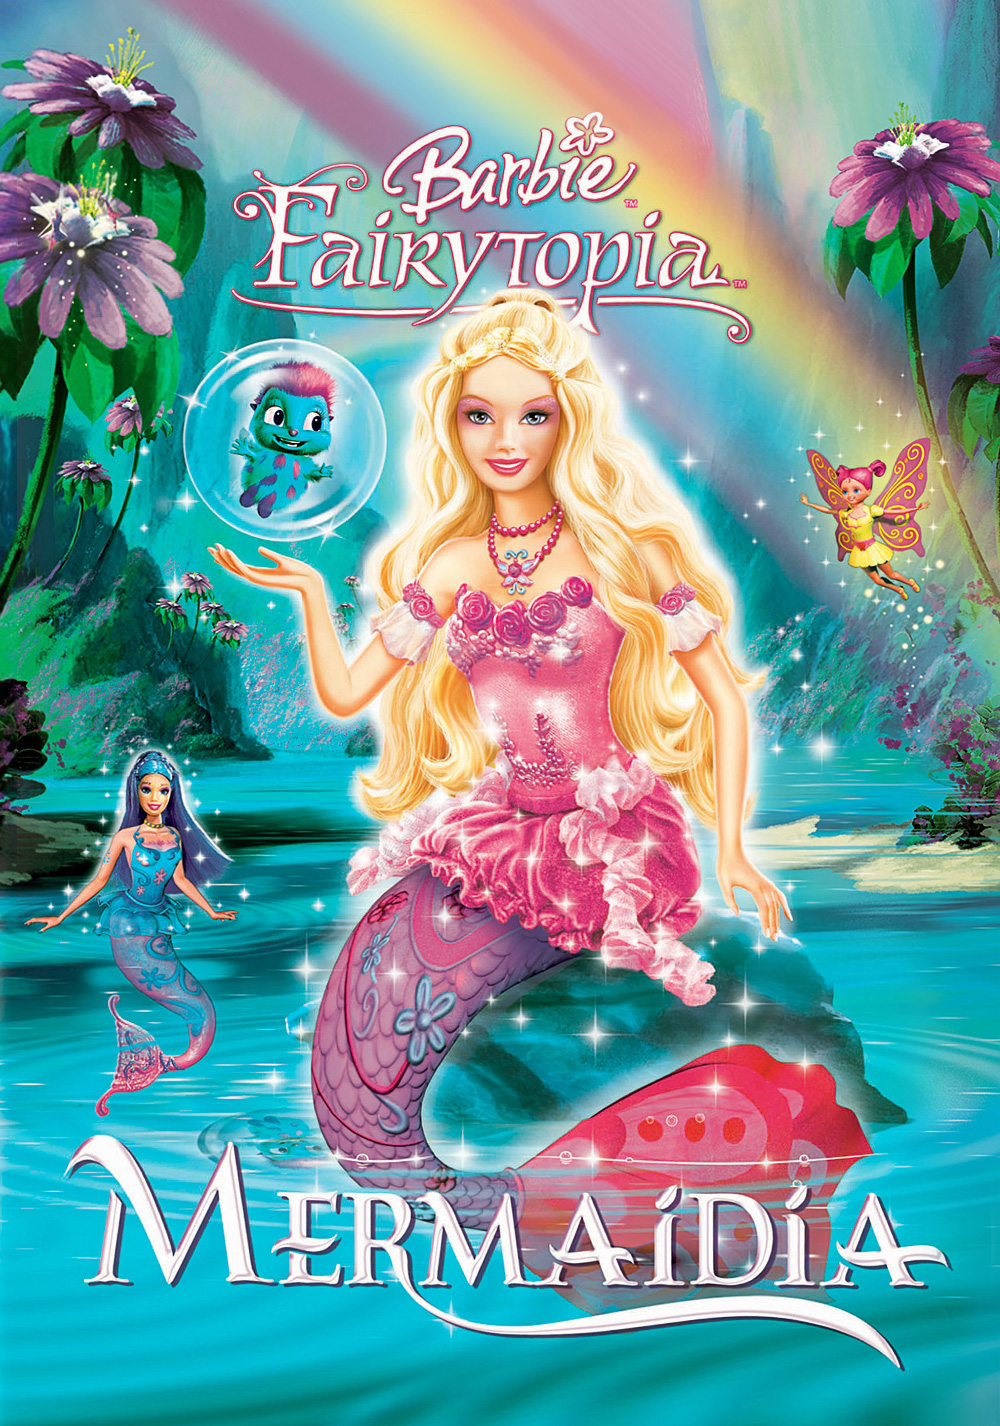  Barbie  Fairytopia  Mermaidia Barbie  Movies  Film  Series 